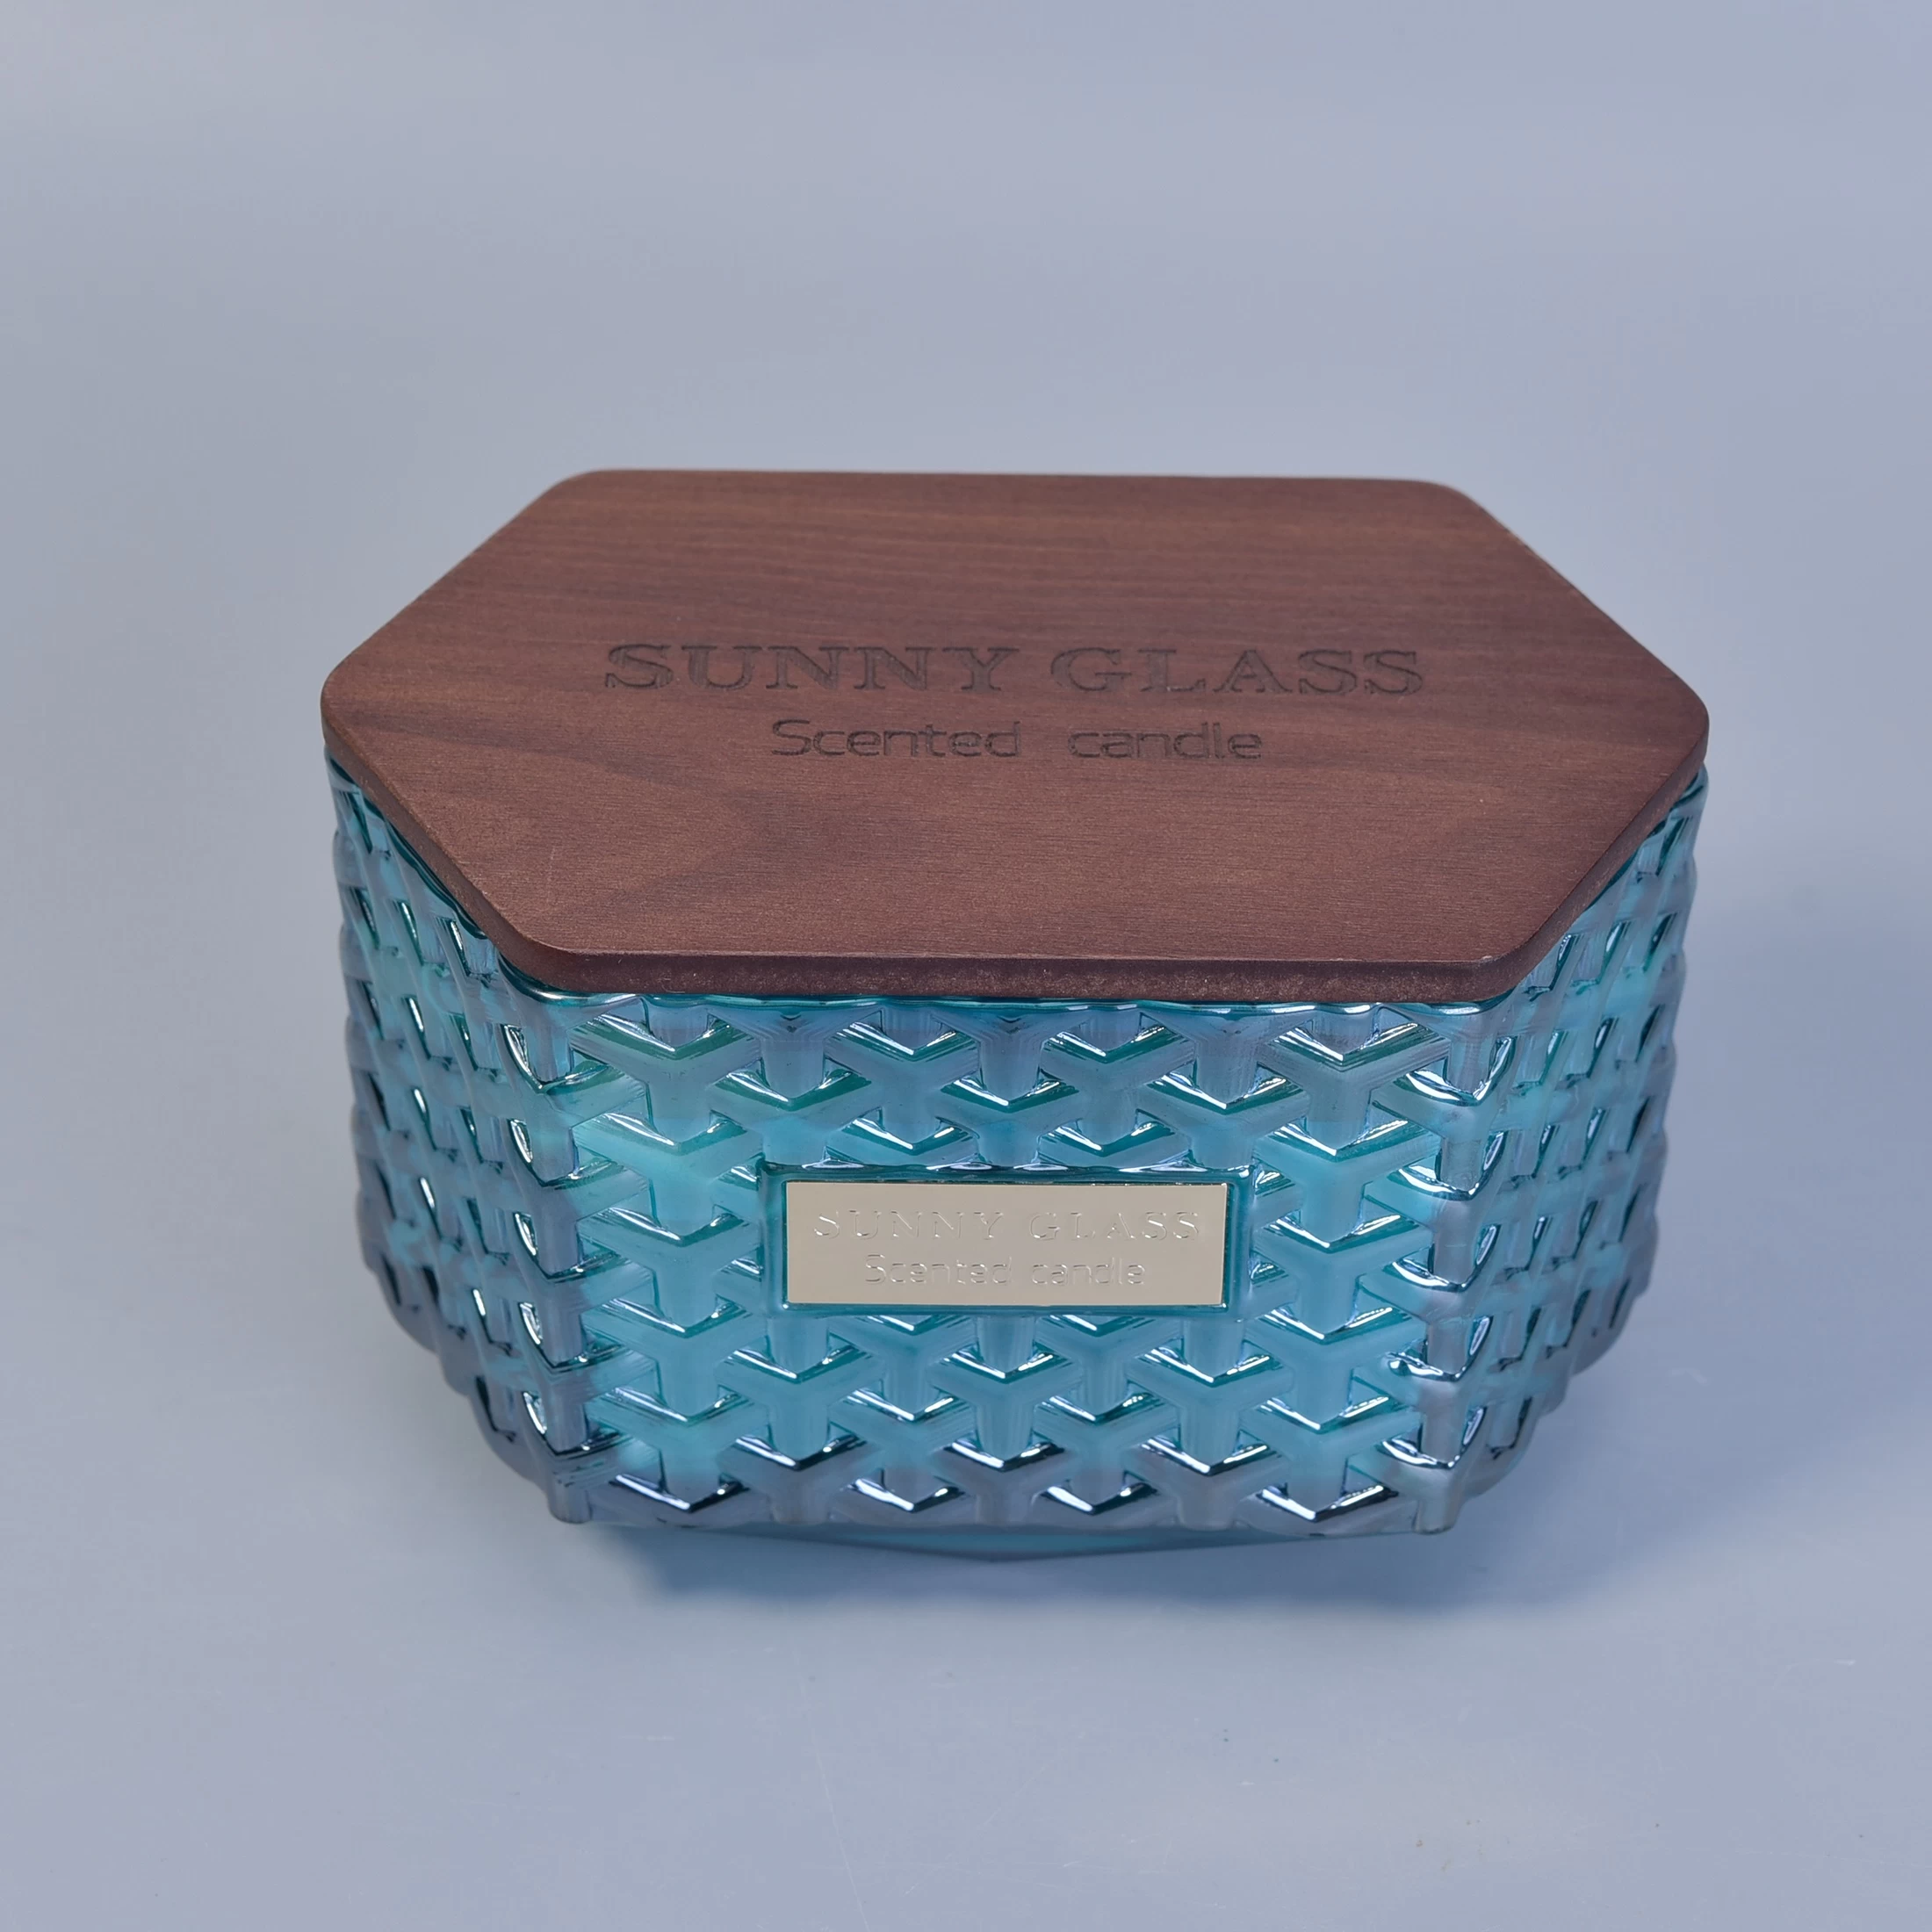 Sunny custom Hexagon luxury glass candle holder with wood lid